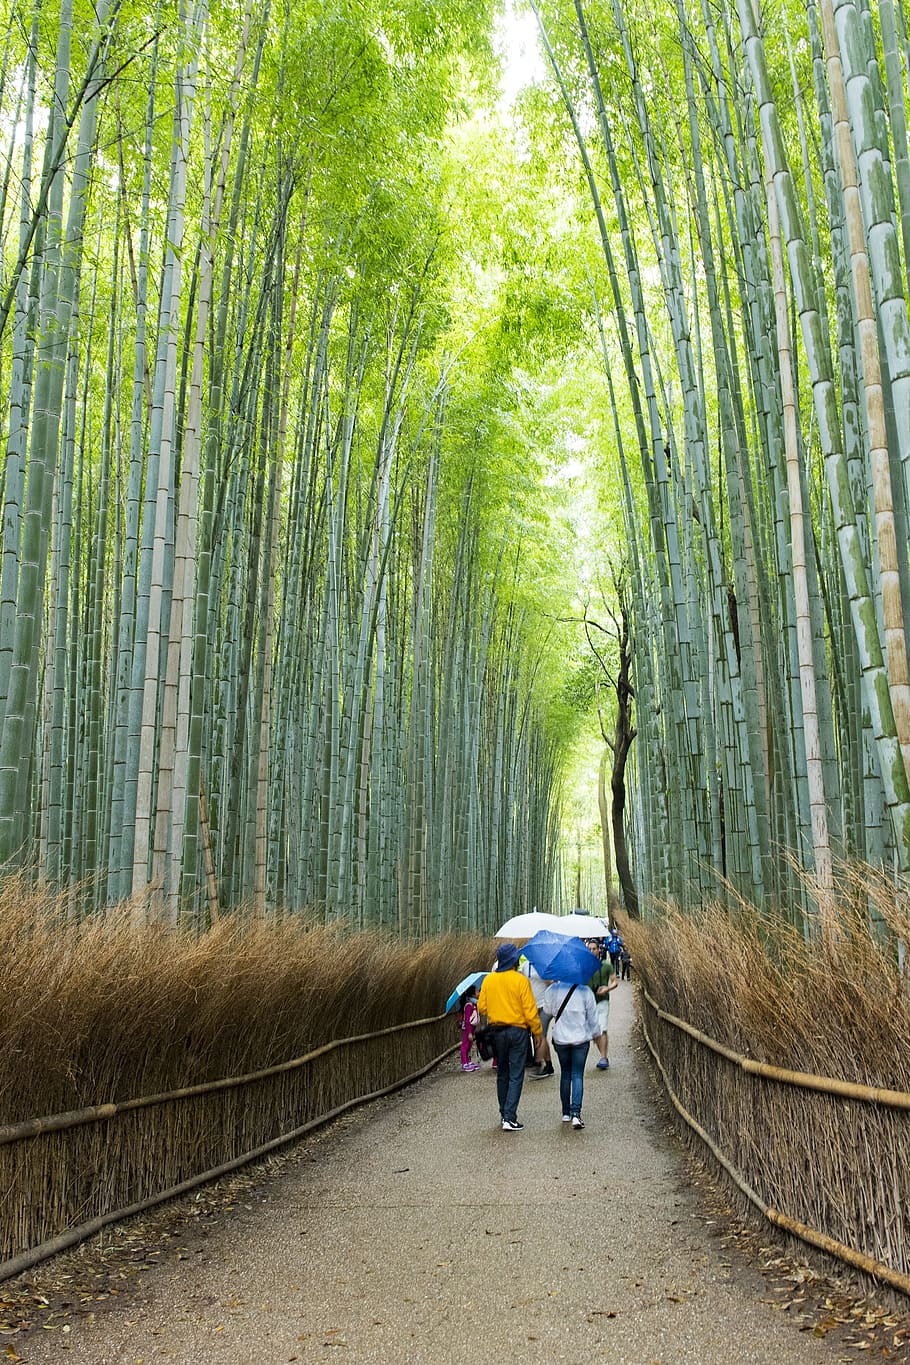 arashiyama bamboo grove, Arashiyama, Bamboo, Grove, travel destinations, japan, japanese, kyoto, asia, nature